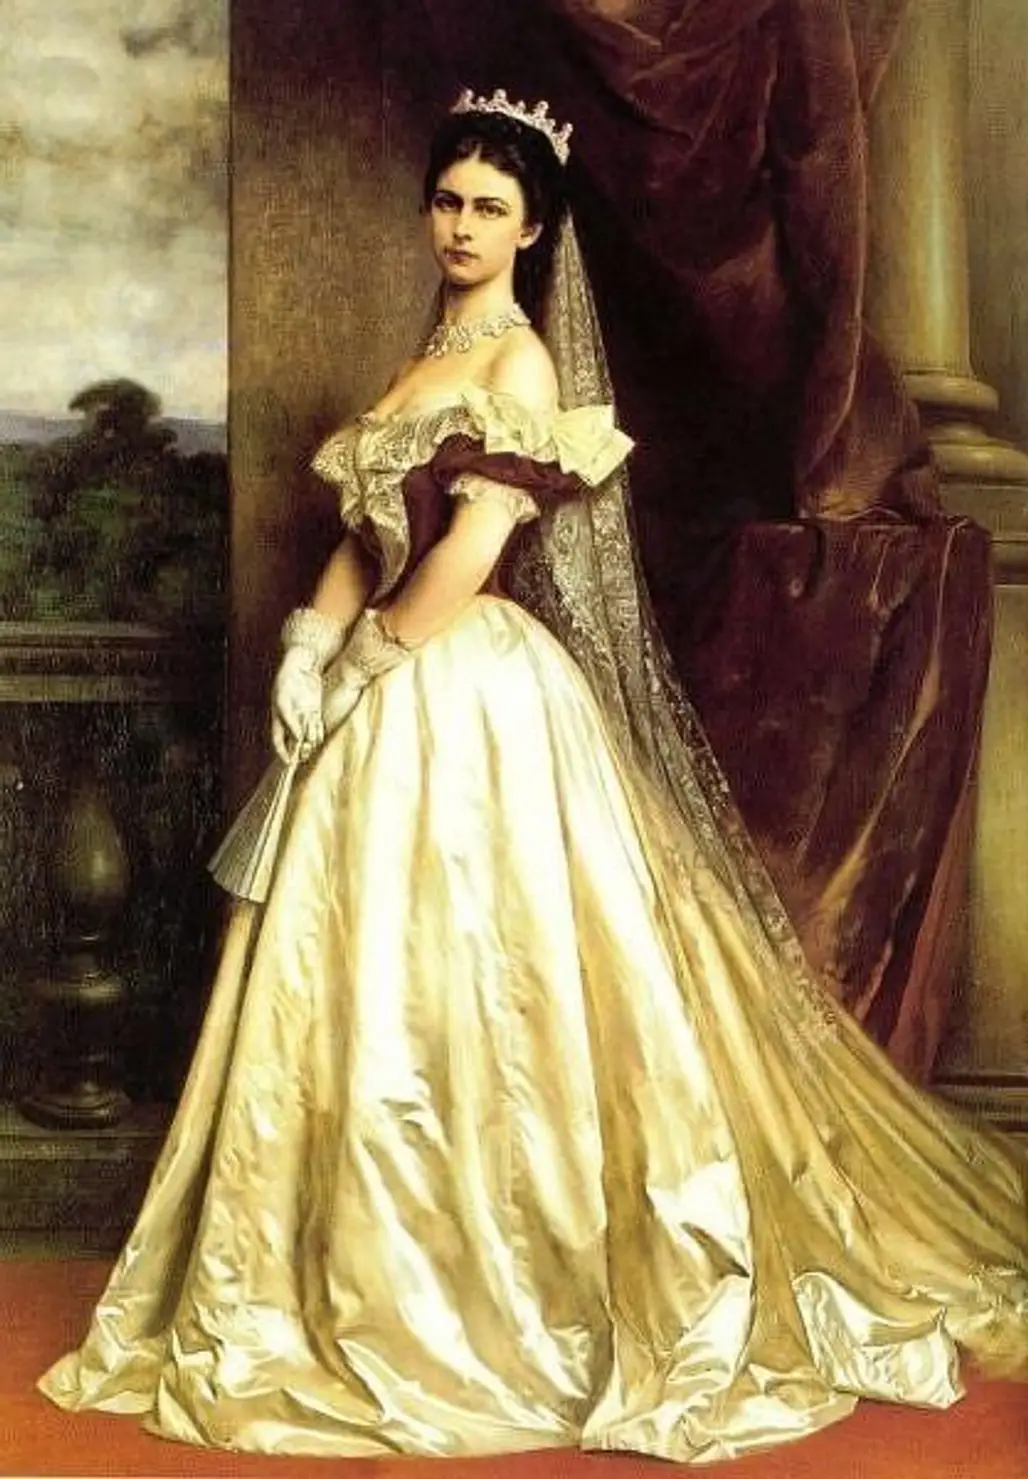 Sisi, Empress Elizabeth of Austria